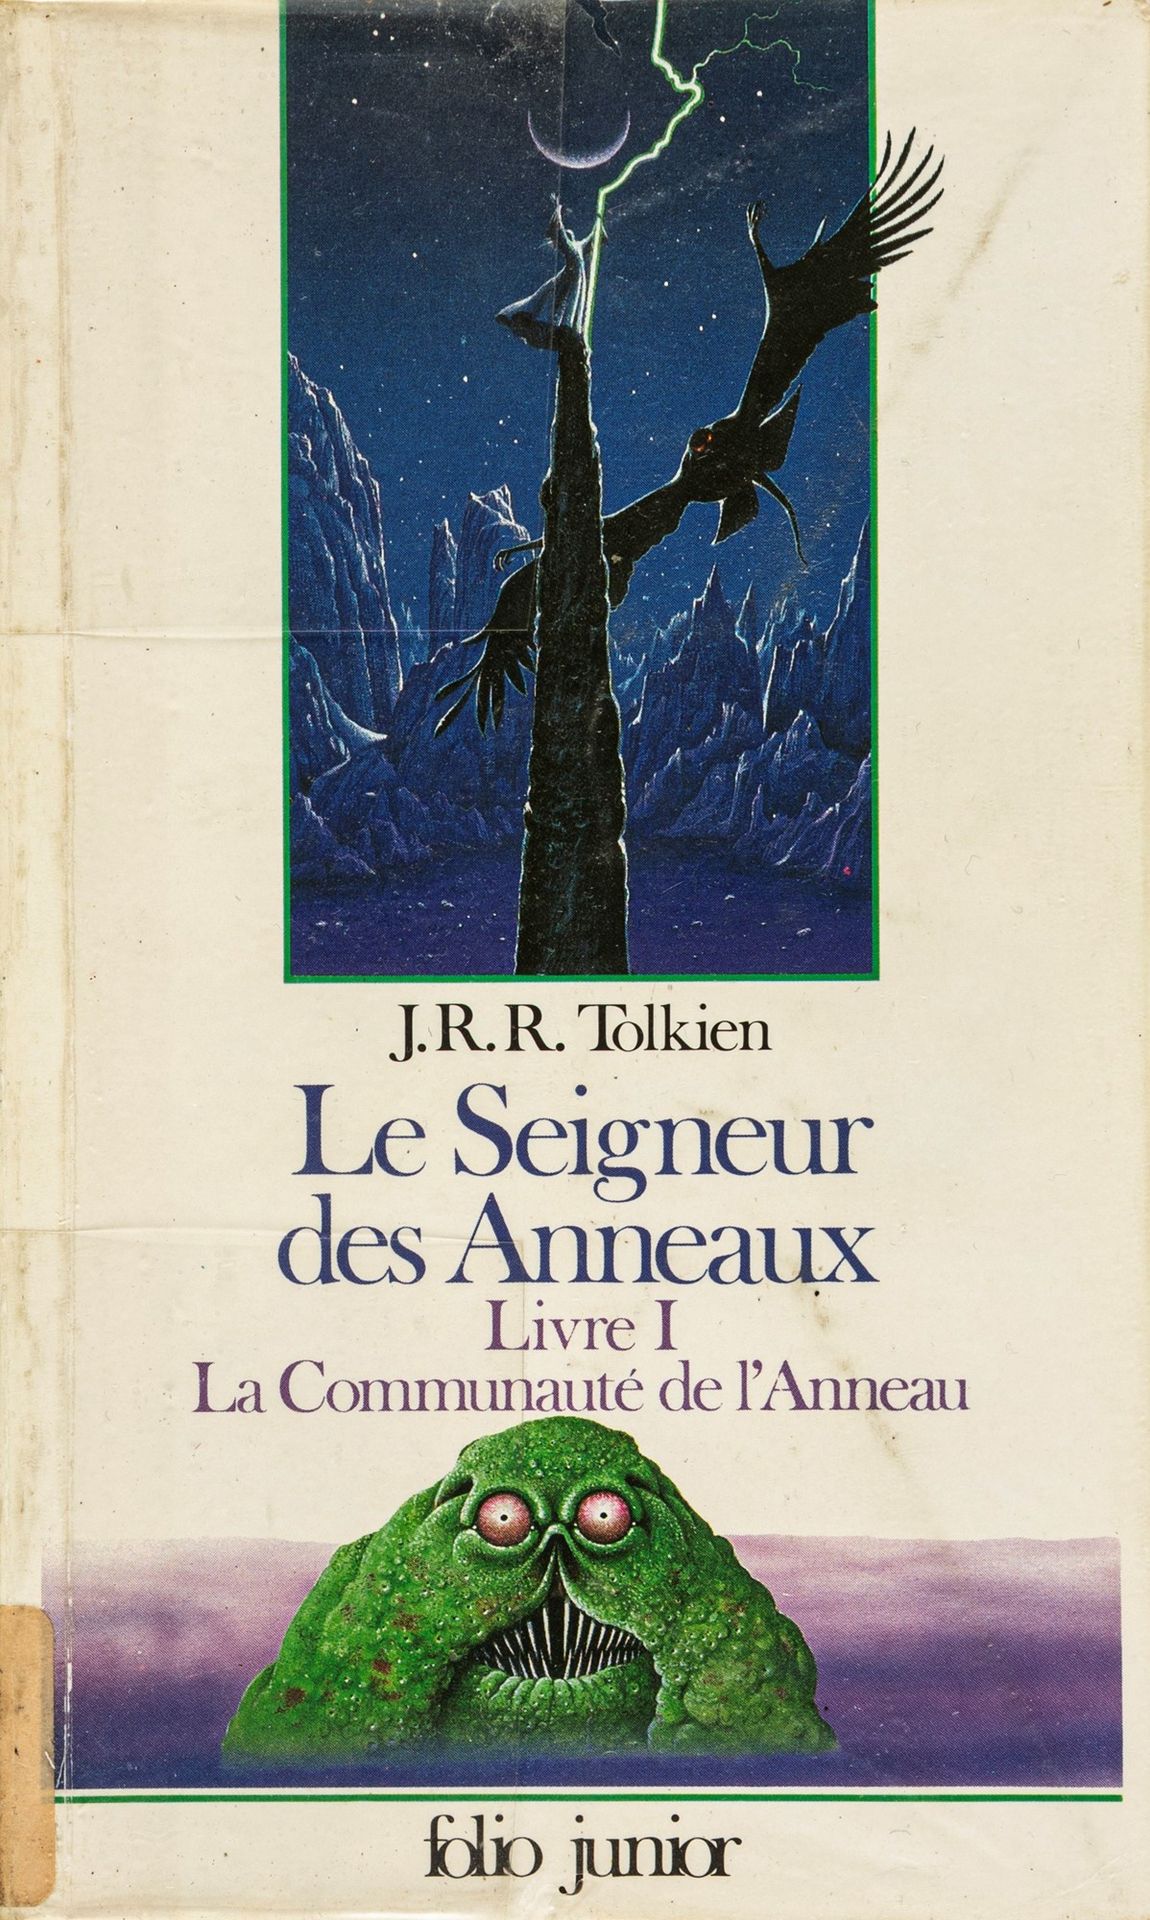 Philippe Munch Le Seigneur des Anneaux, 1988

Bleistift, Tinte und Aquarell auf &hellip;